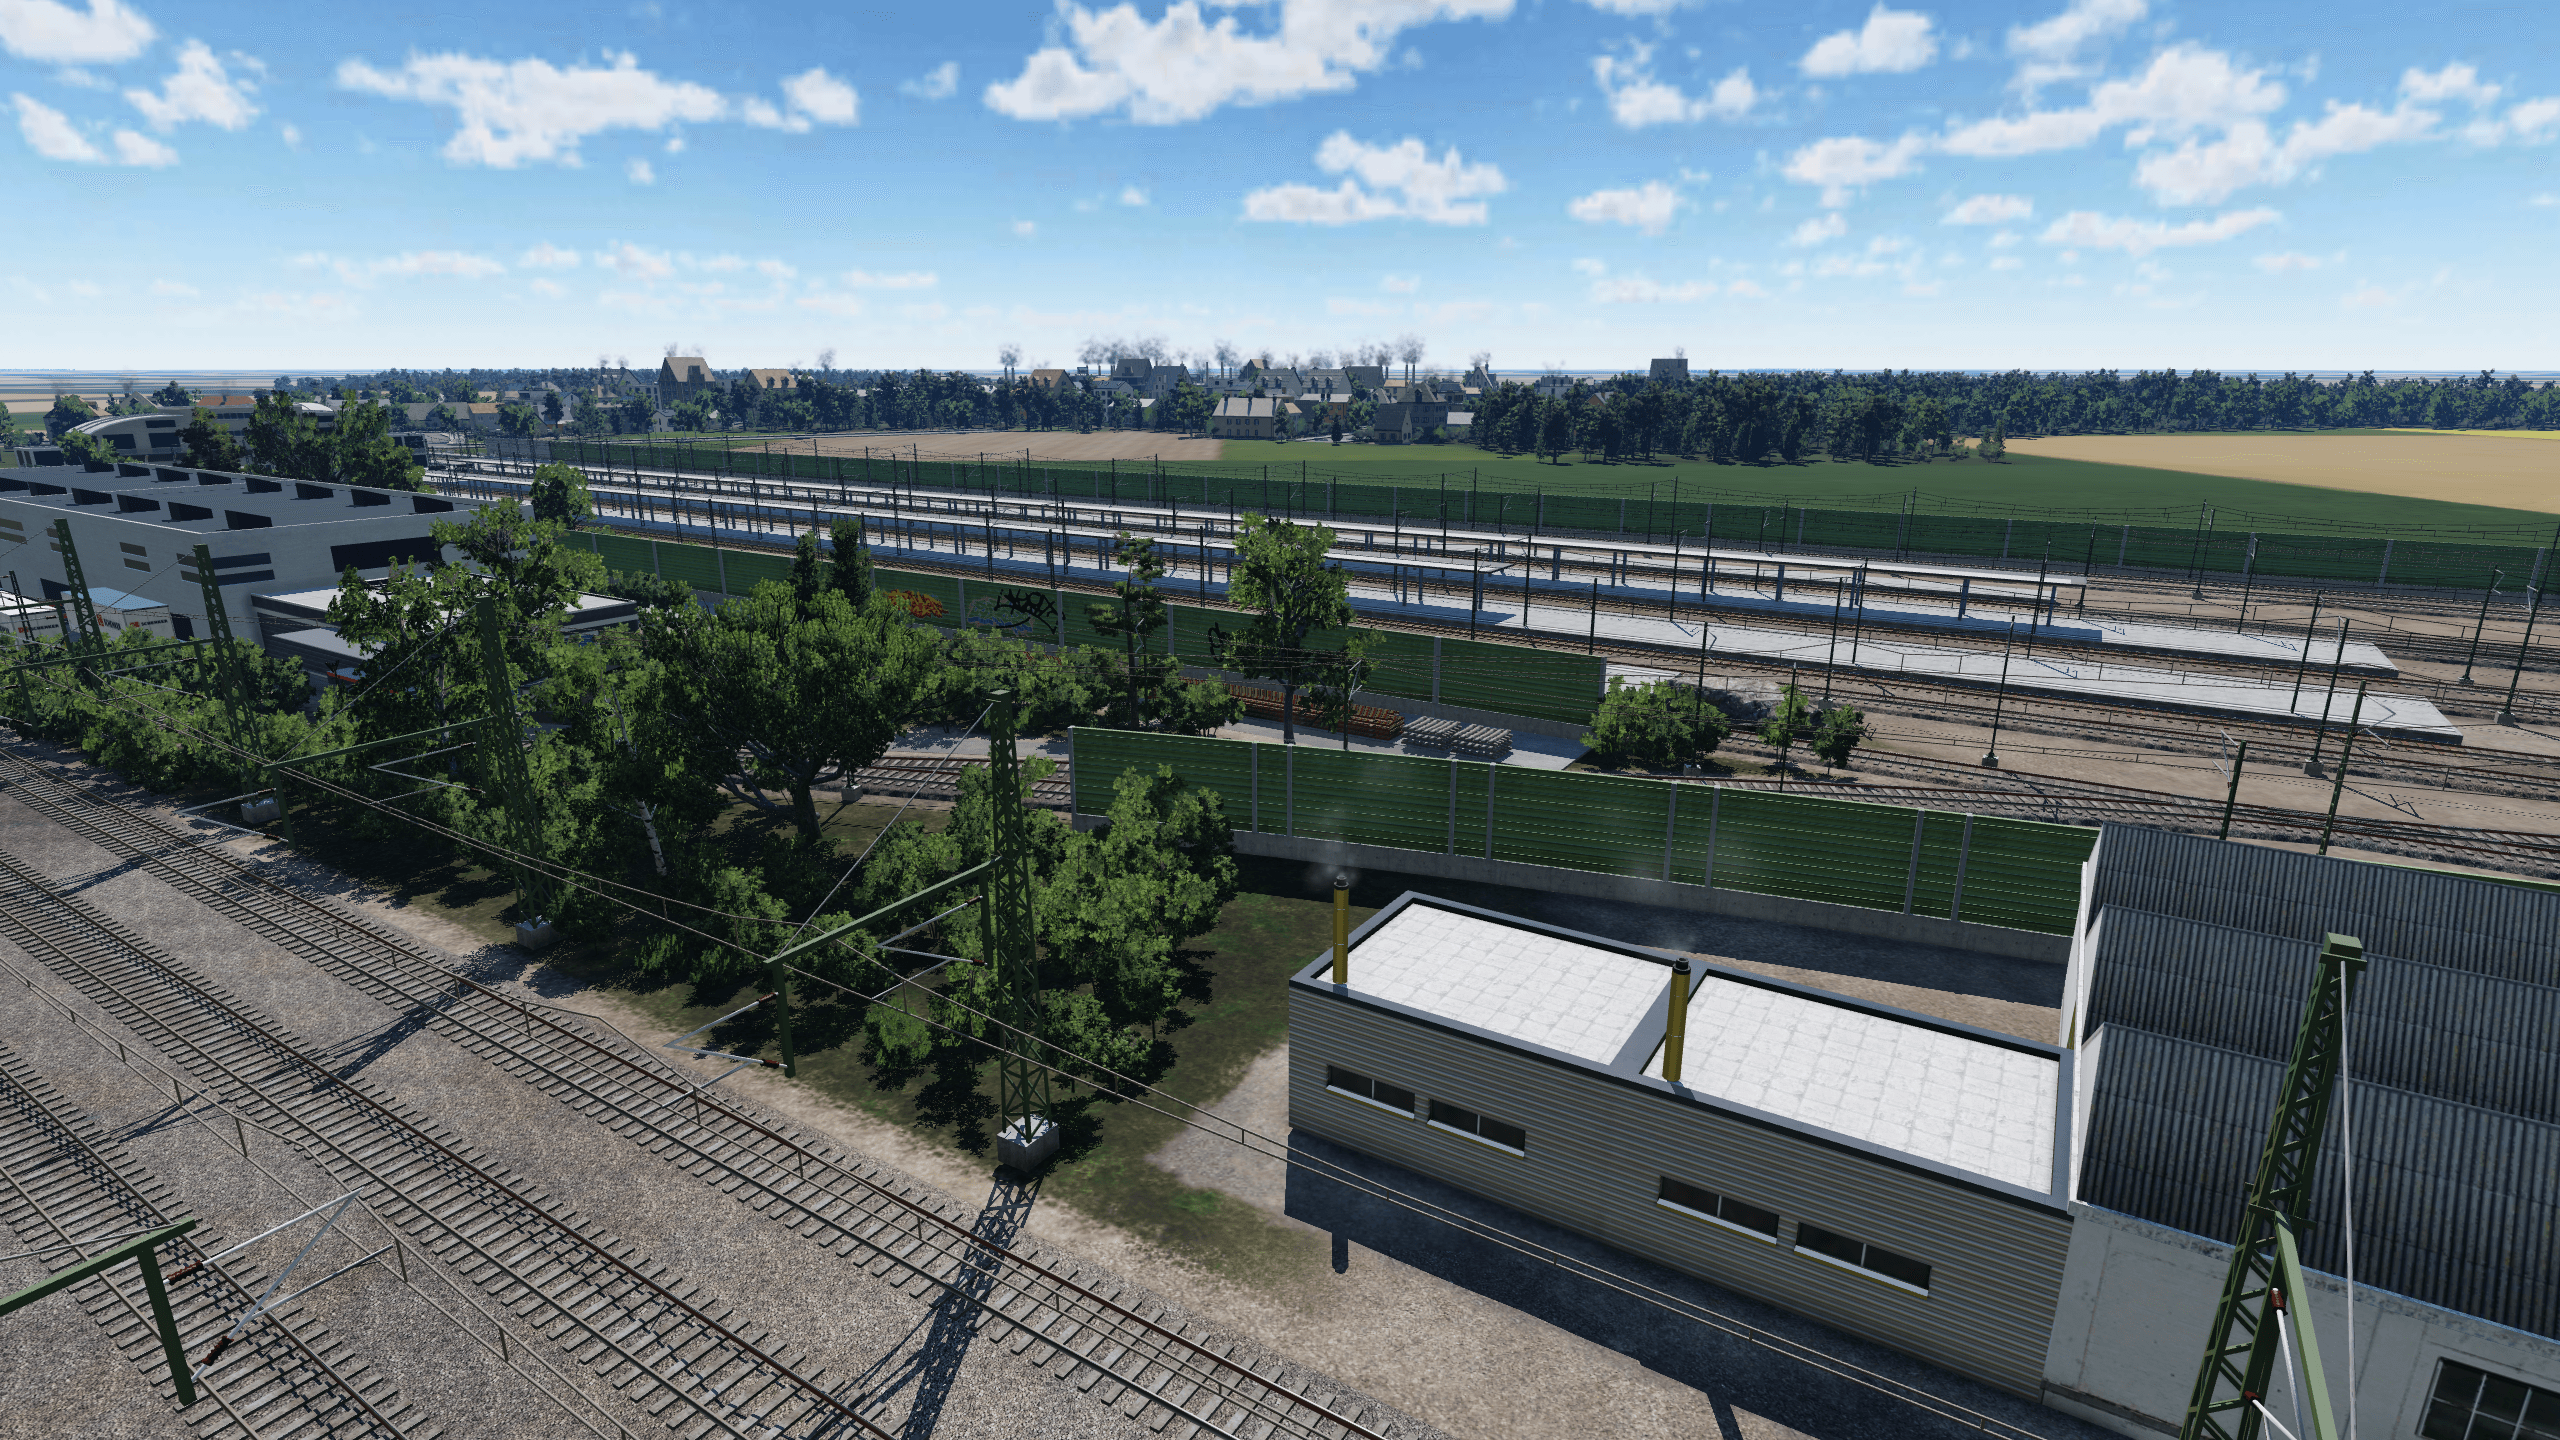 Rangierbahnhof